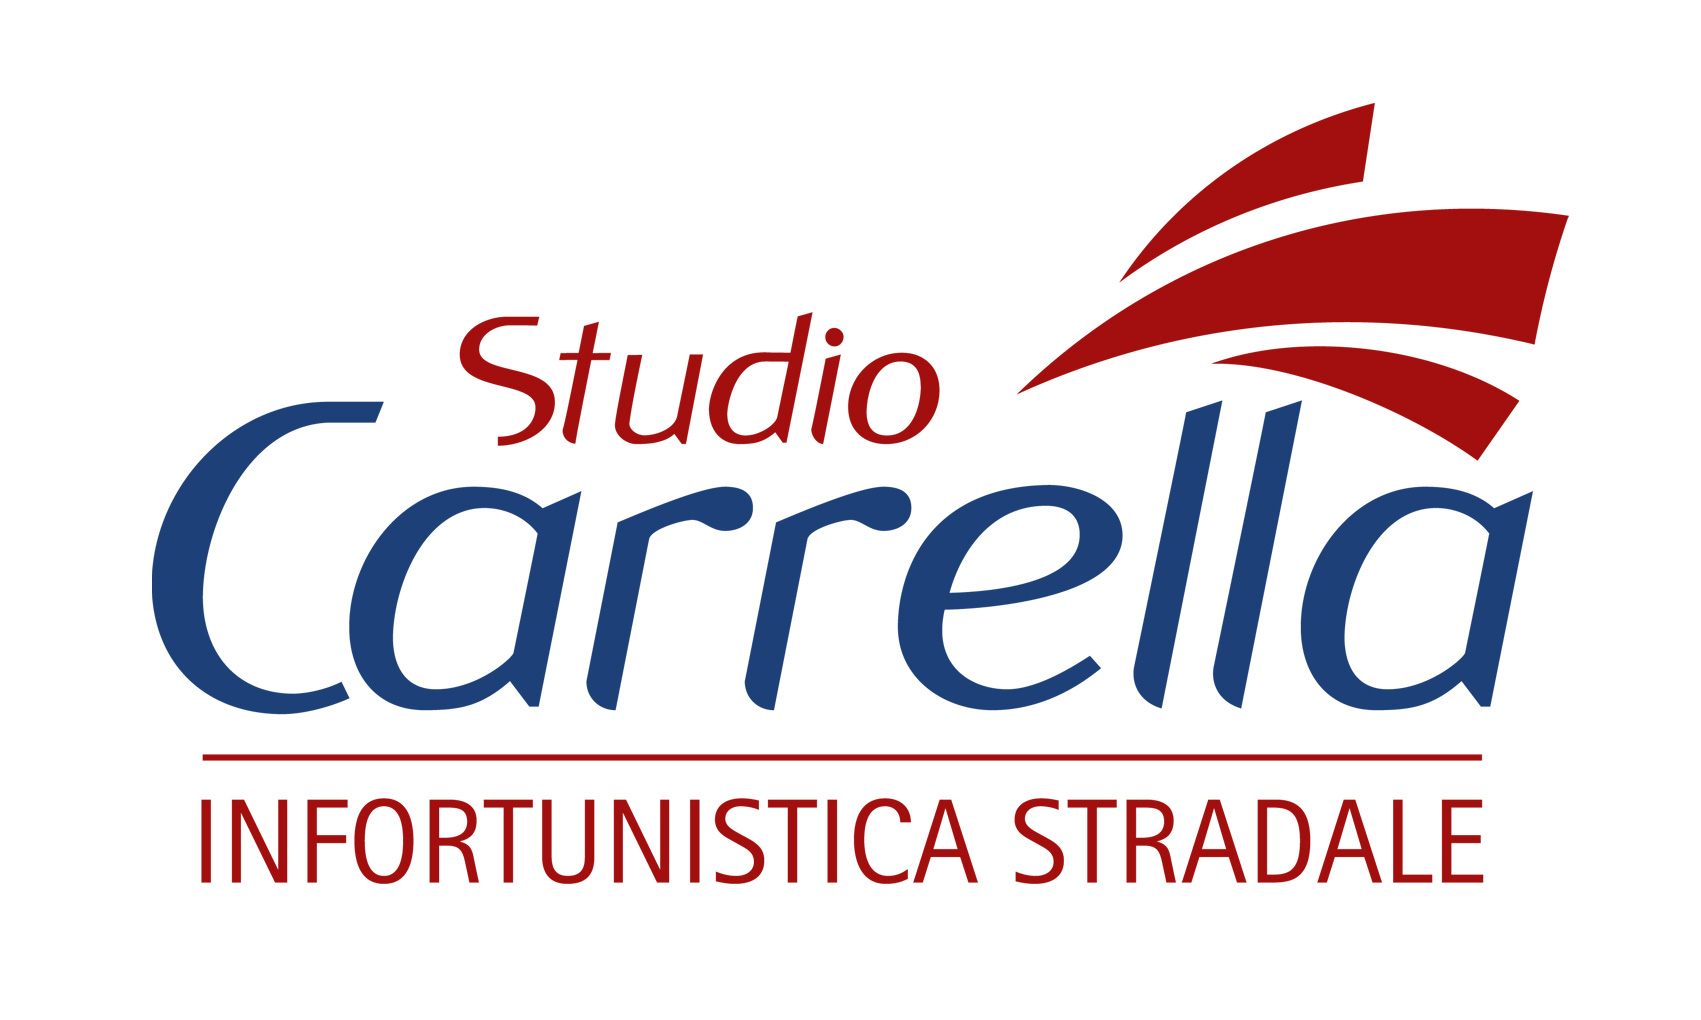 www.infortunisticastradalecarrella.it